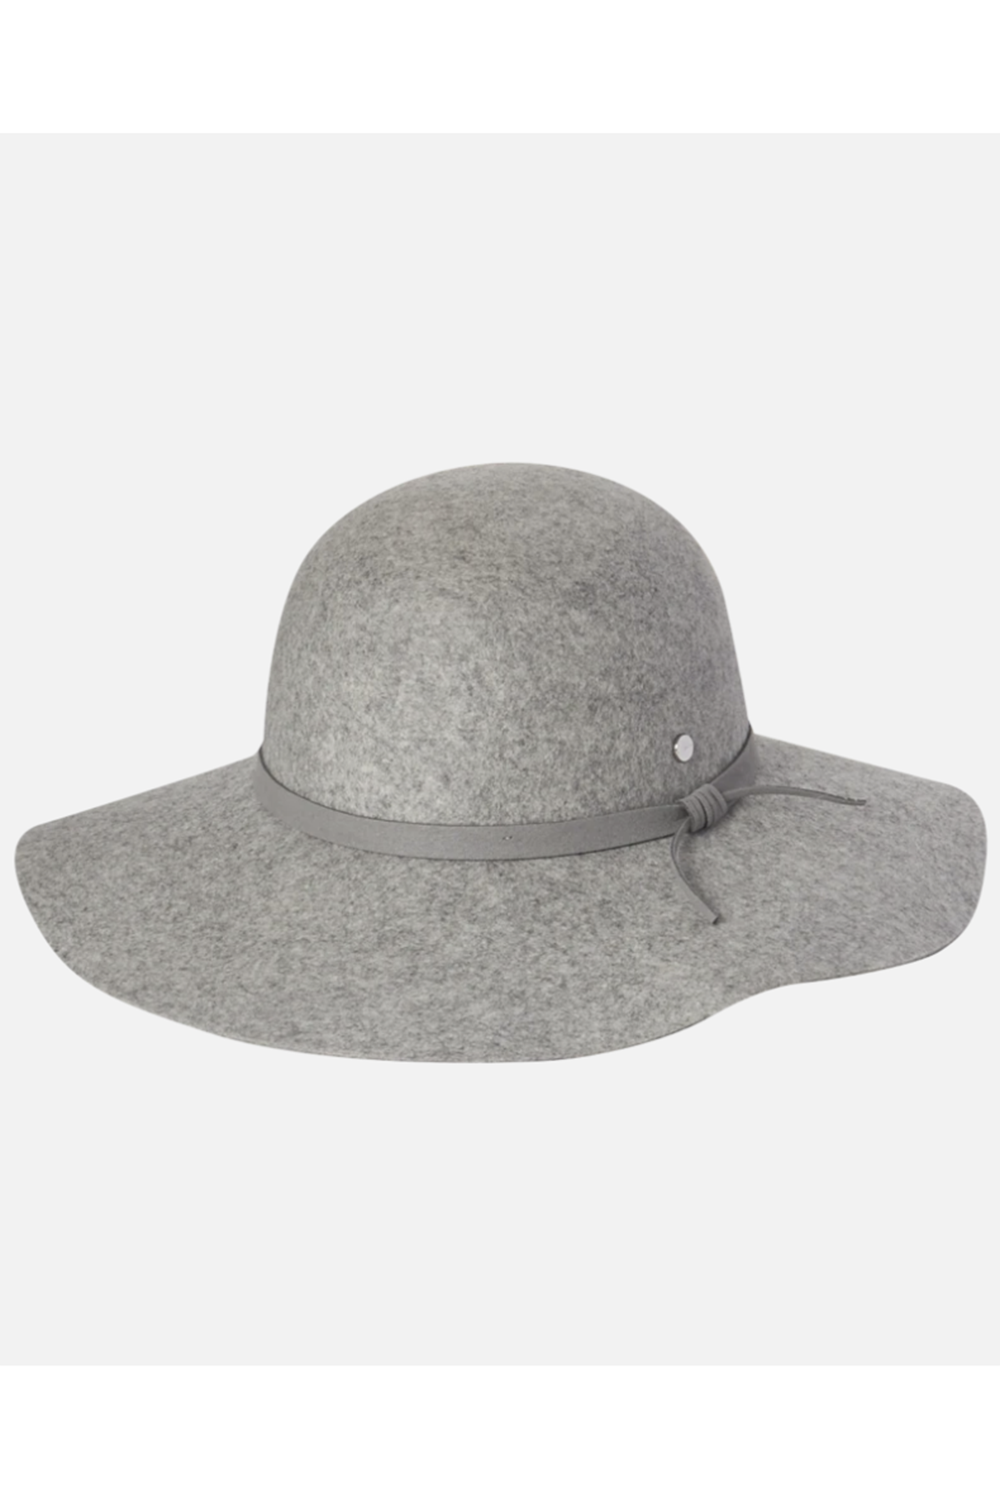 Ladies Wide Brim Hat - Forever After Grey